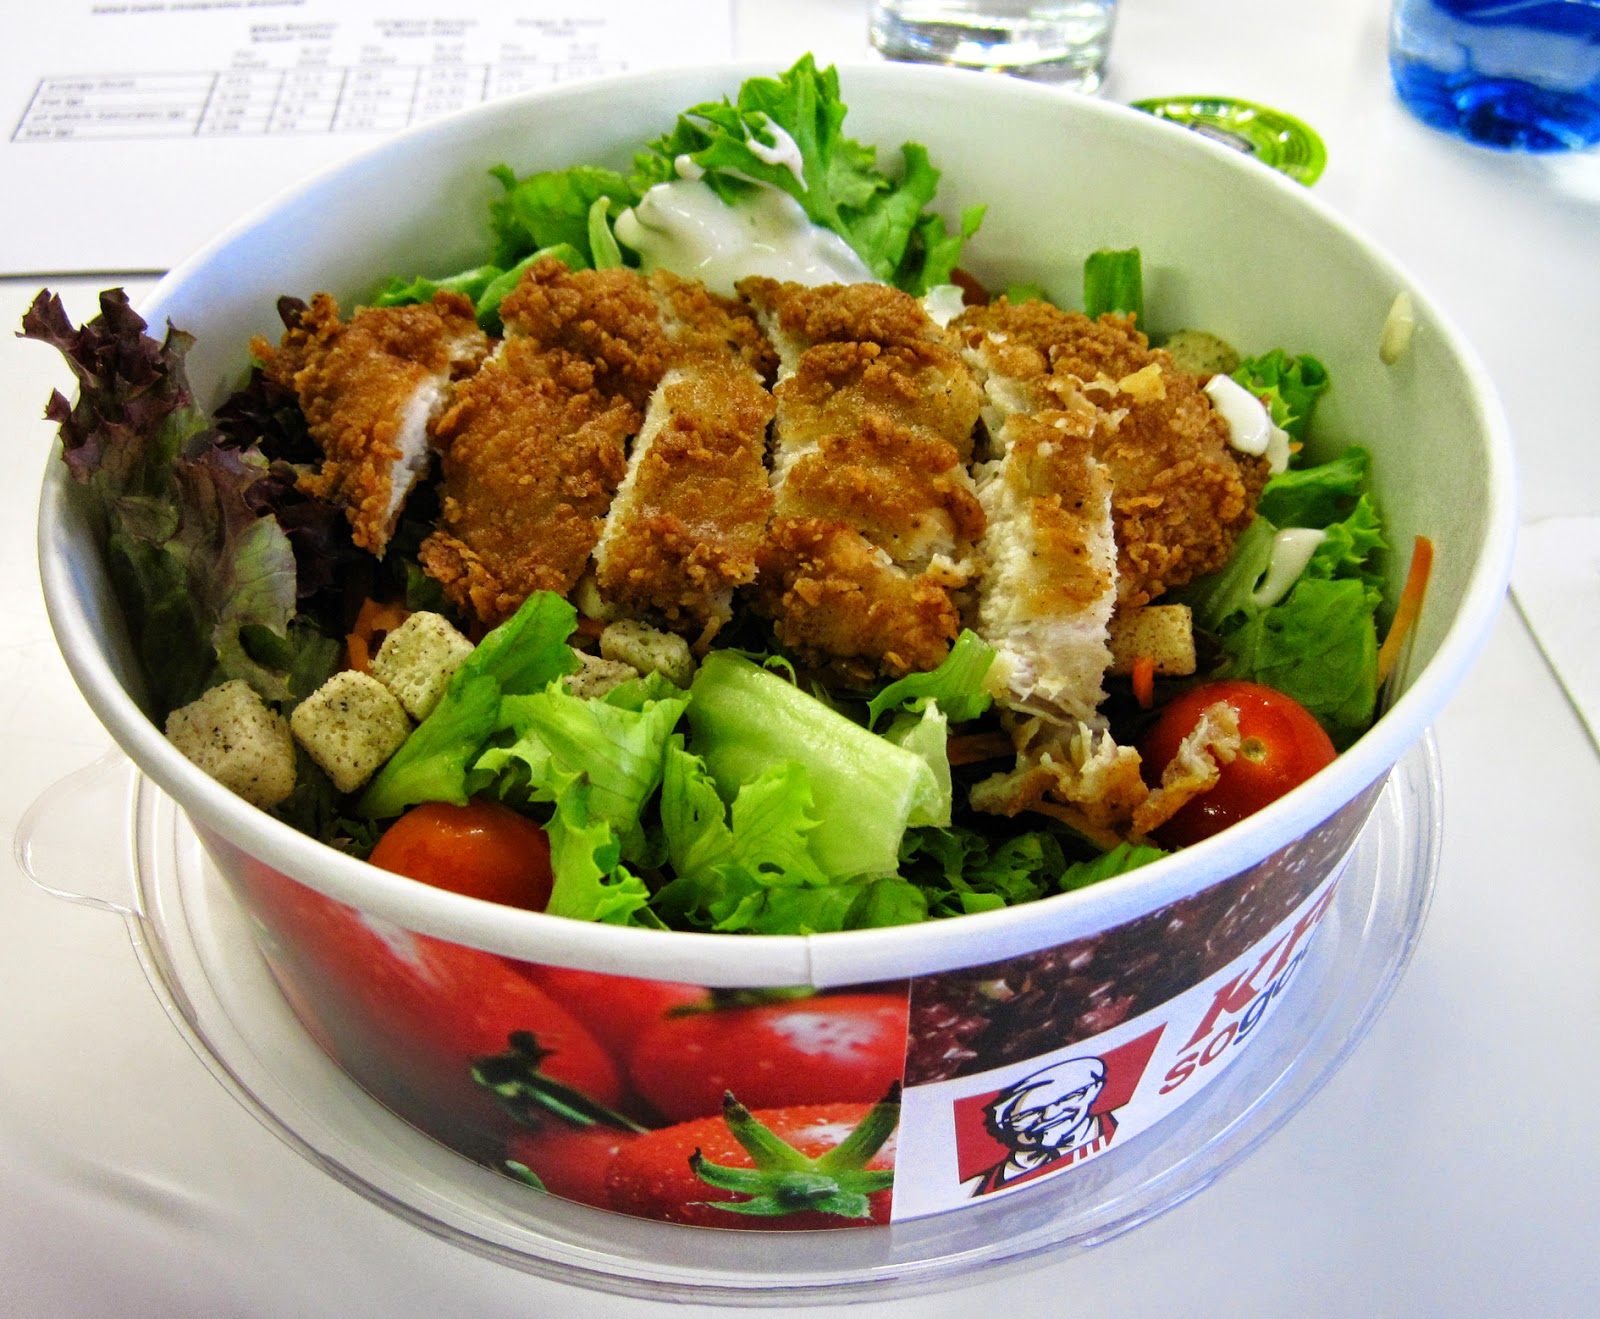 Does KFC sell salads?